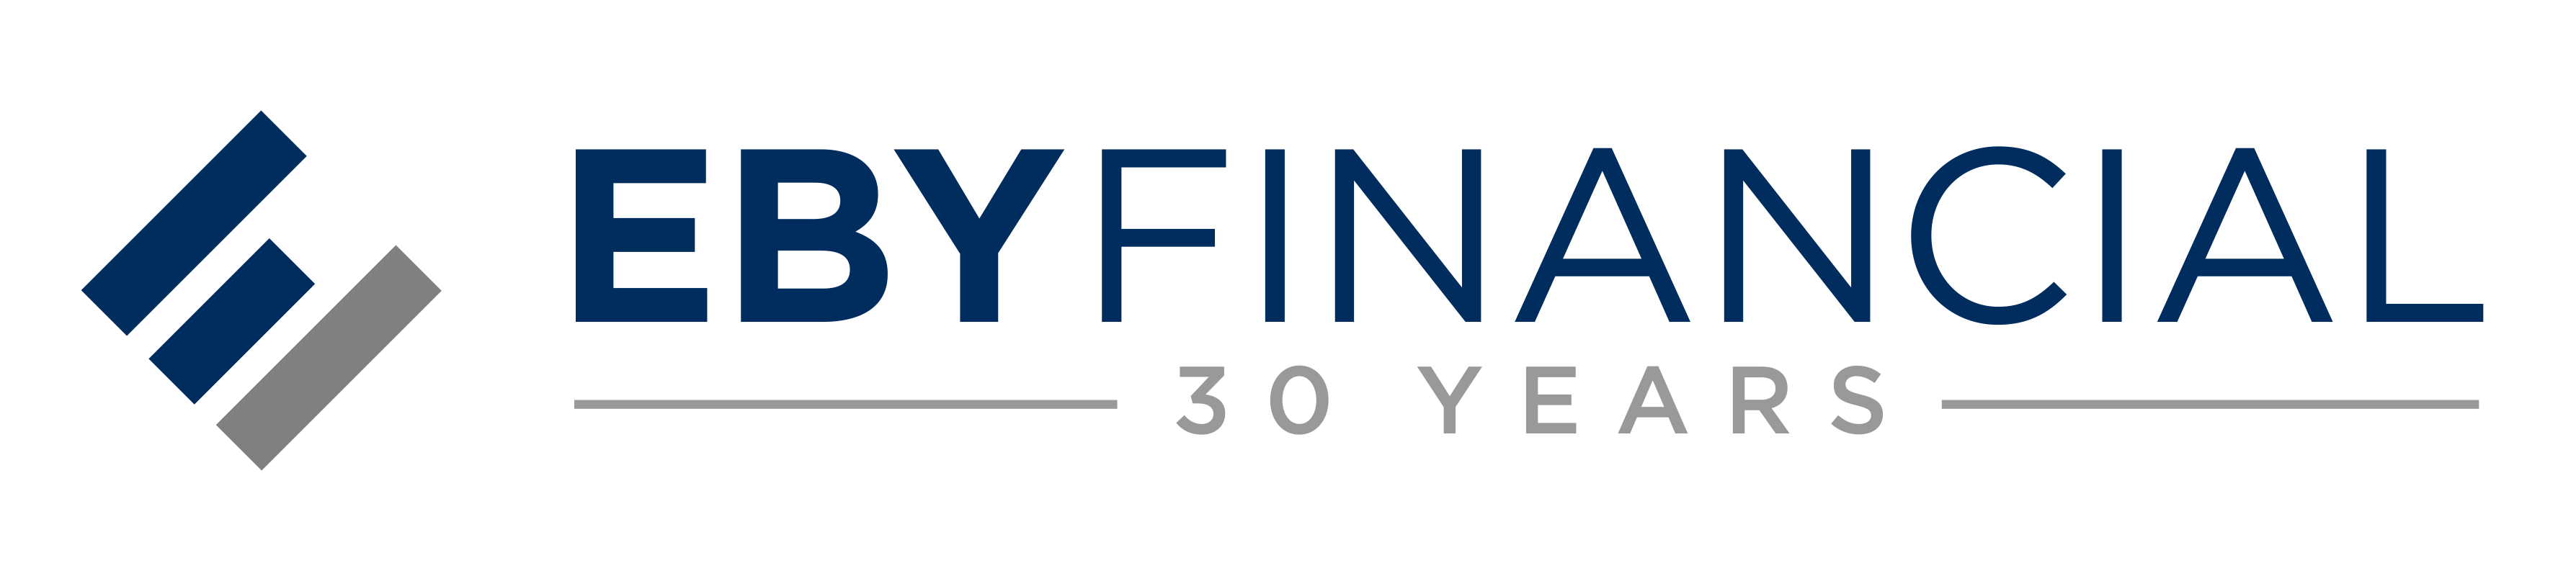 Eby financial logo